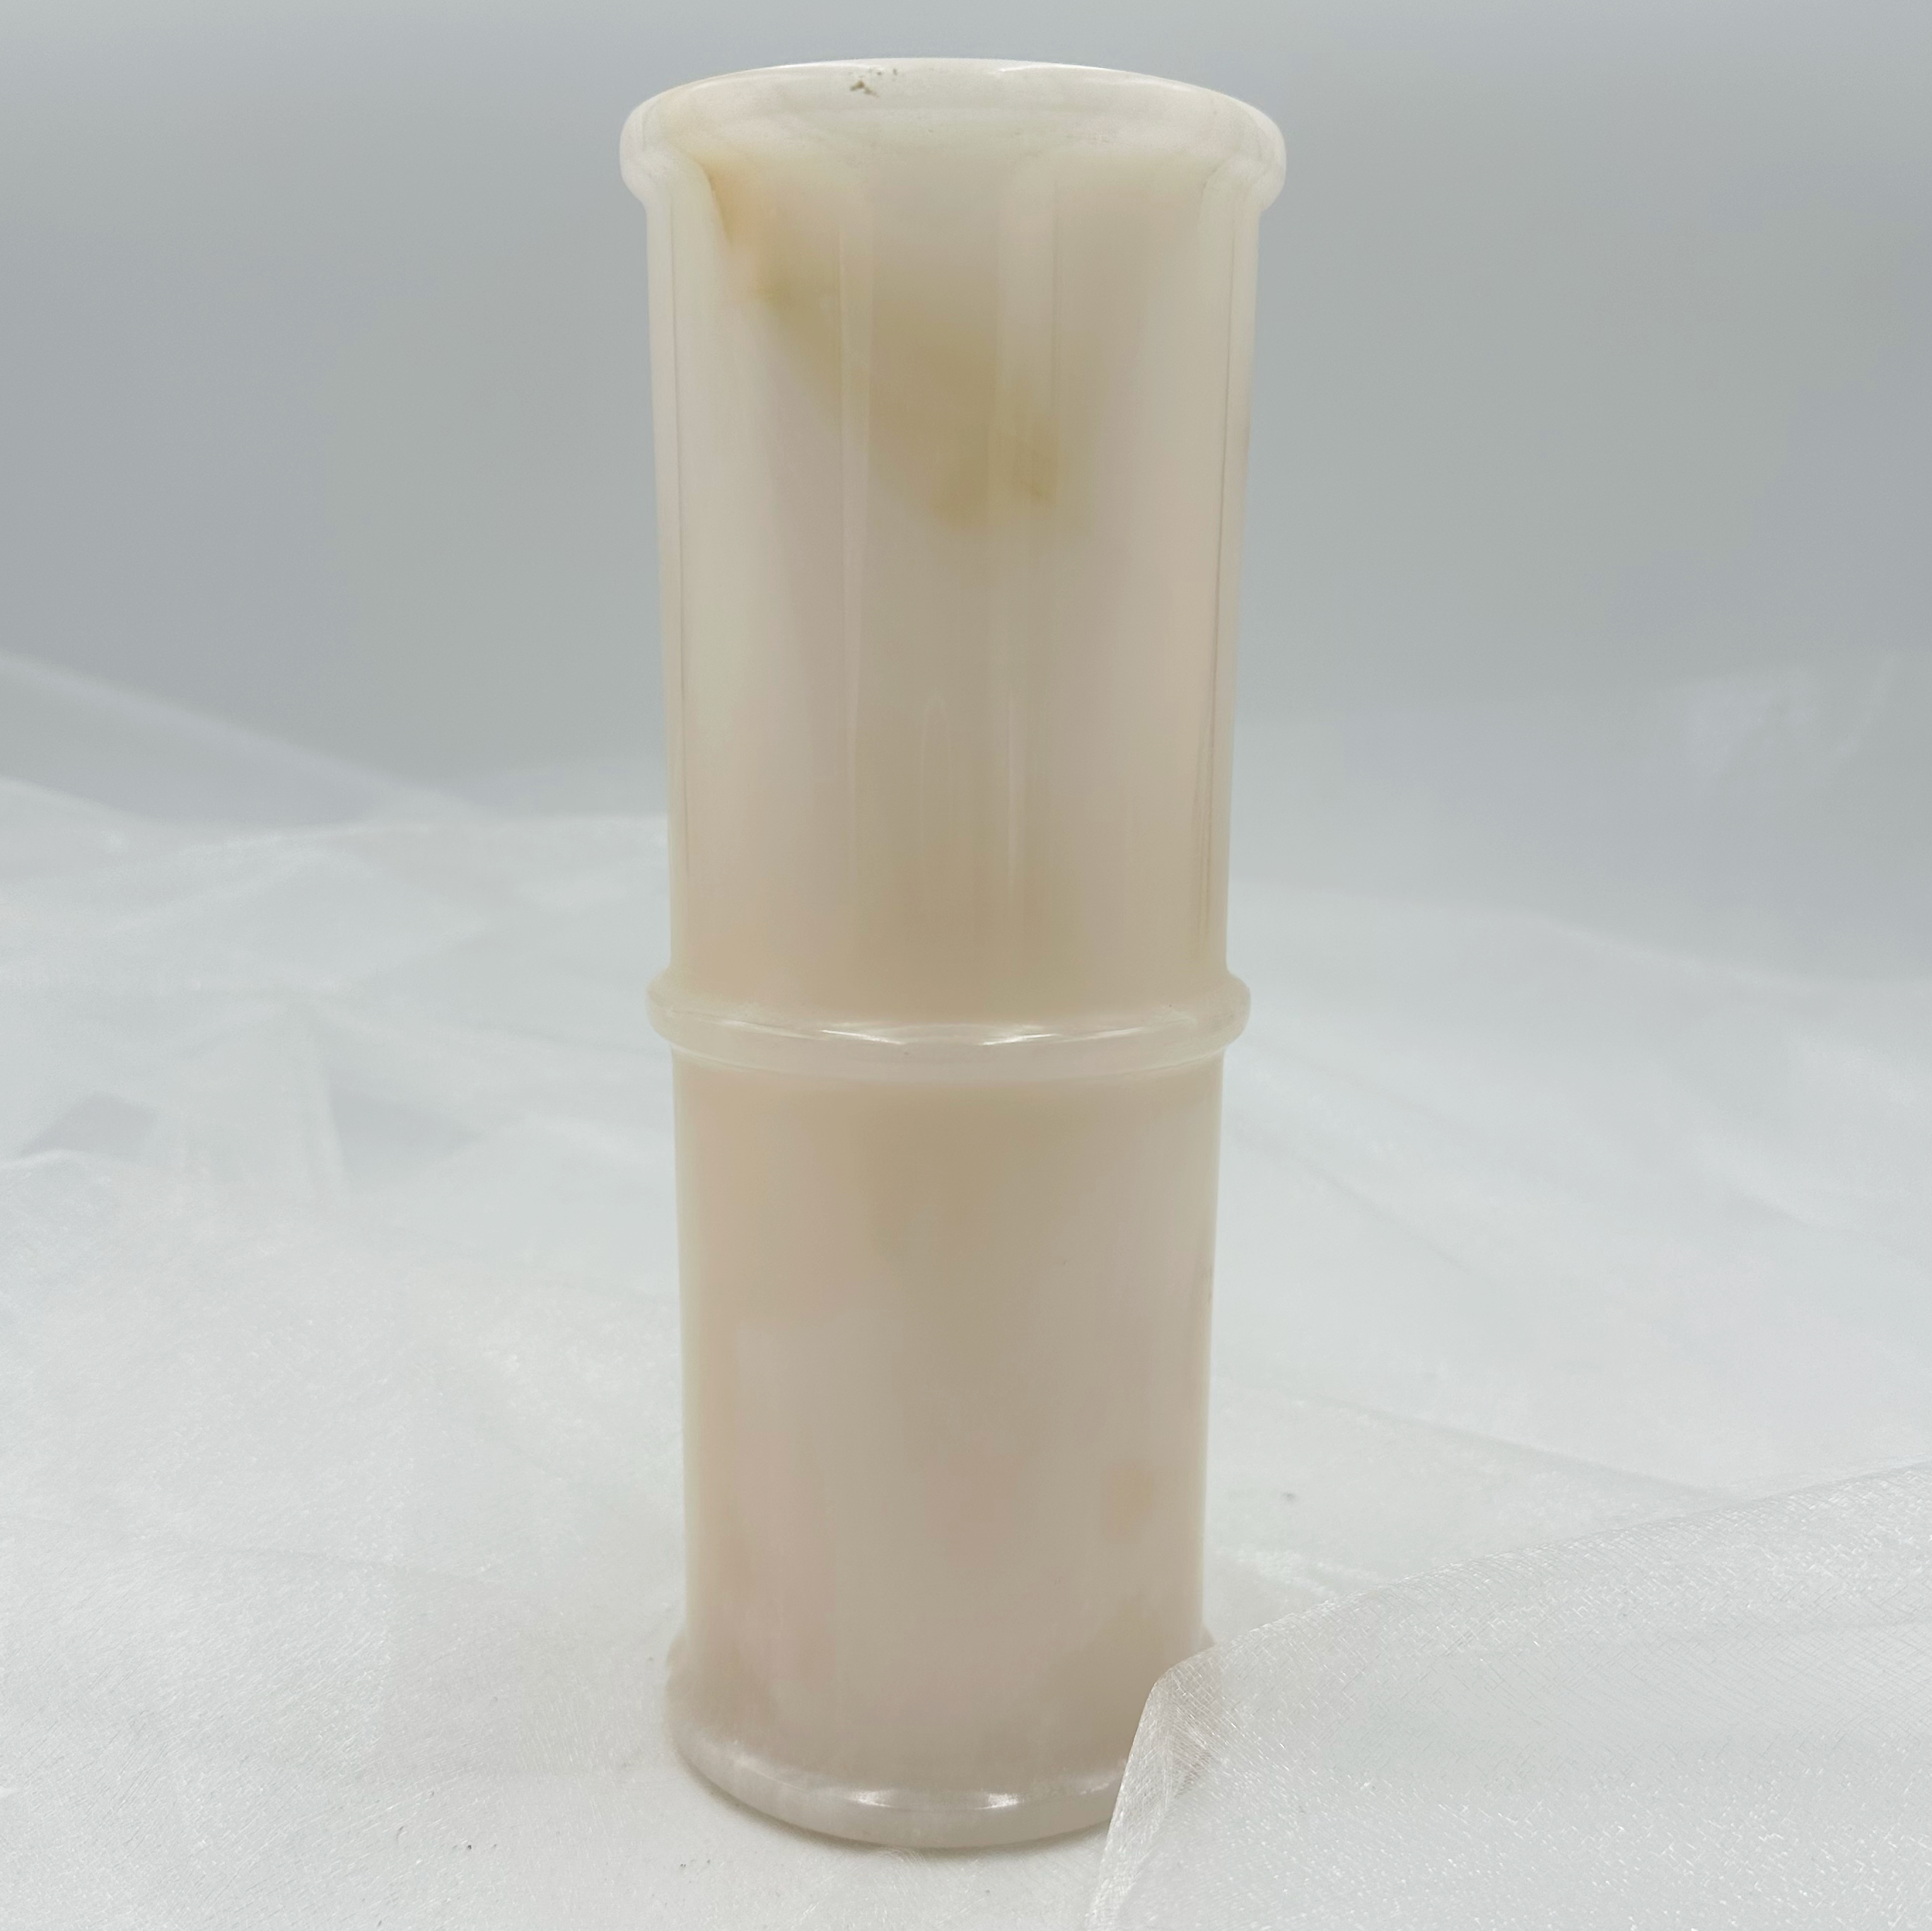 8" Cylindrical Vase in Marble & Onyx: White Onyx